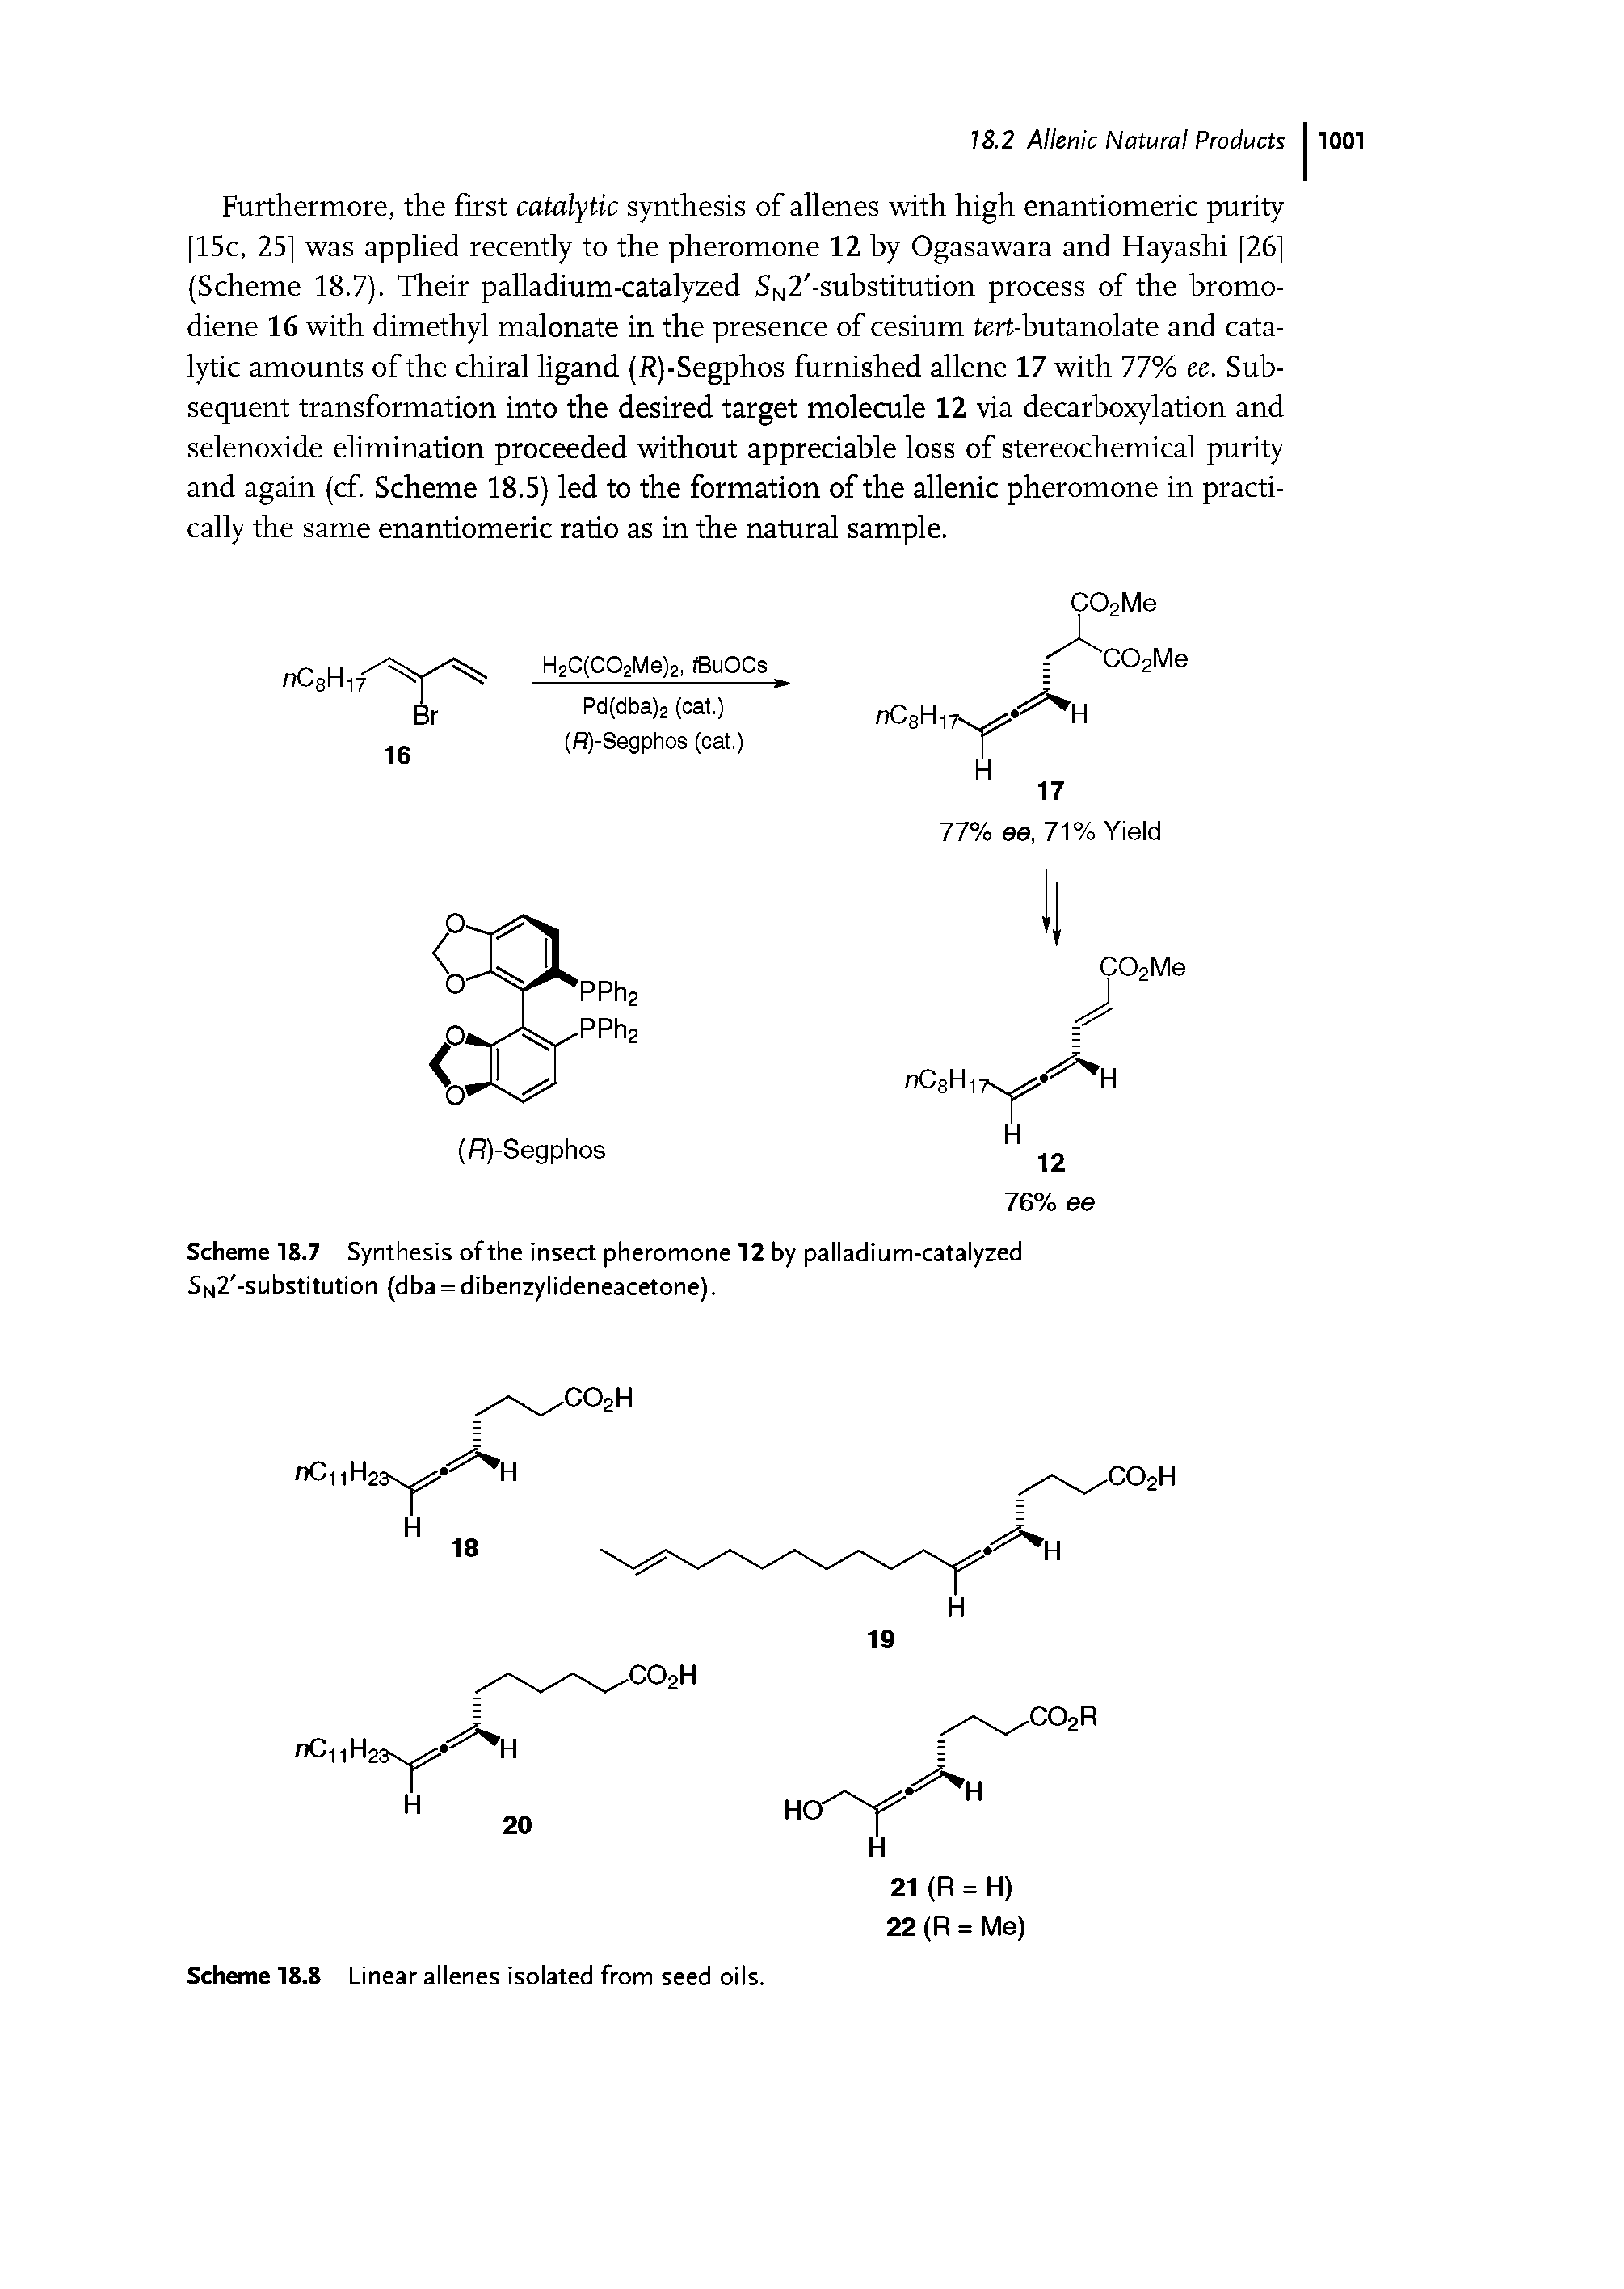 Scheme 18.7 Synthesis ofthe insect pheromone 12 by palladium-catalyzed SN2 -substitution (dba = dibenzylideneacetone).